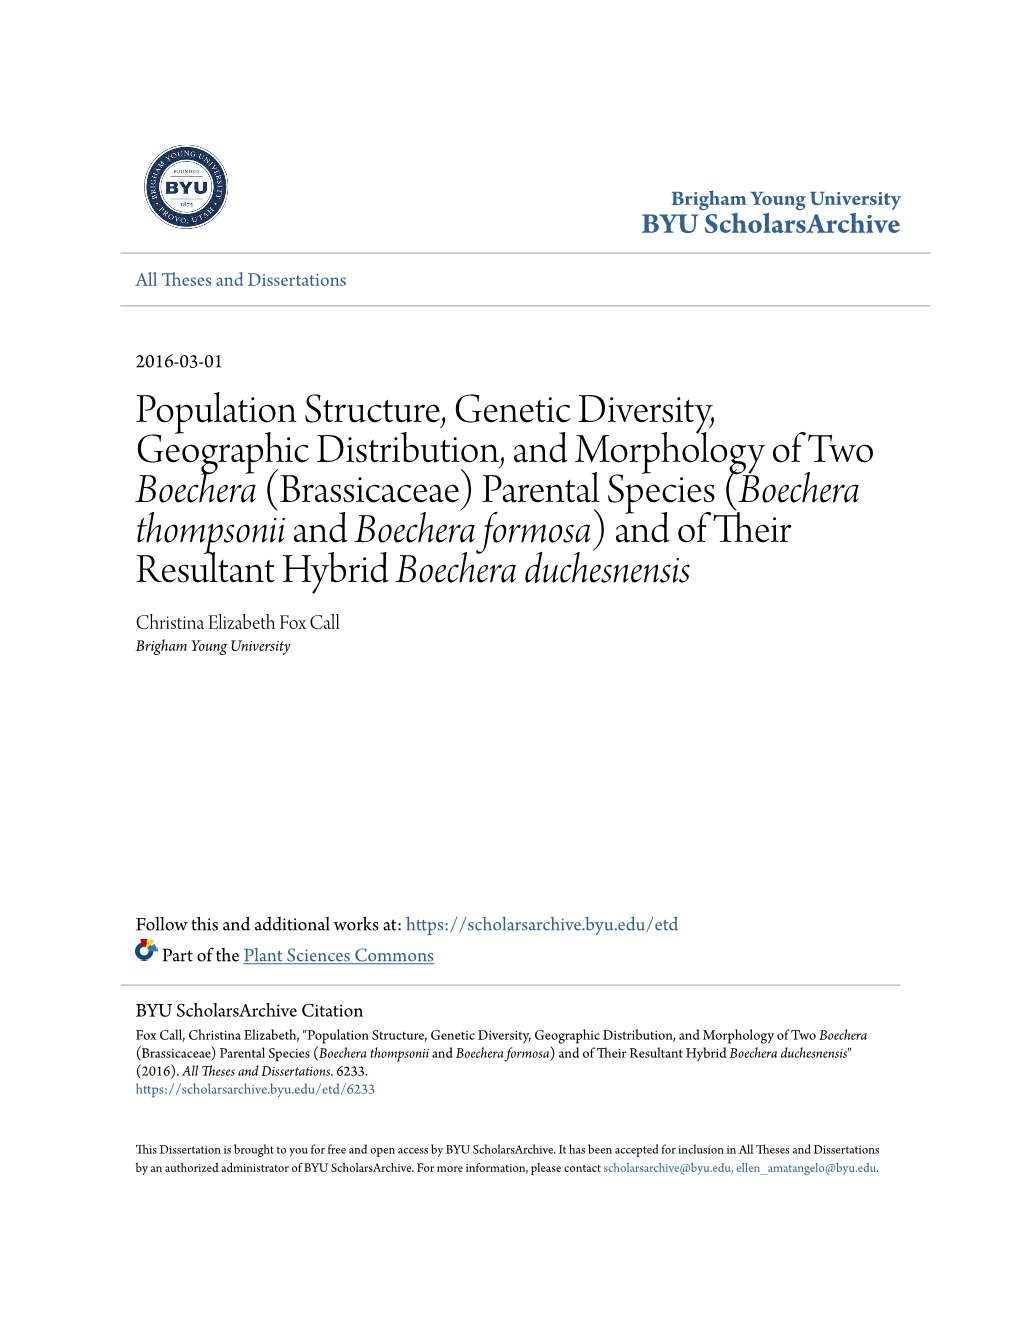 Population Structure, Genetic Diversity